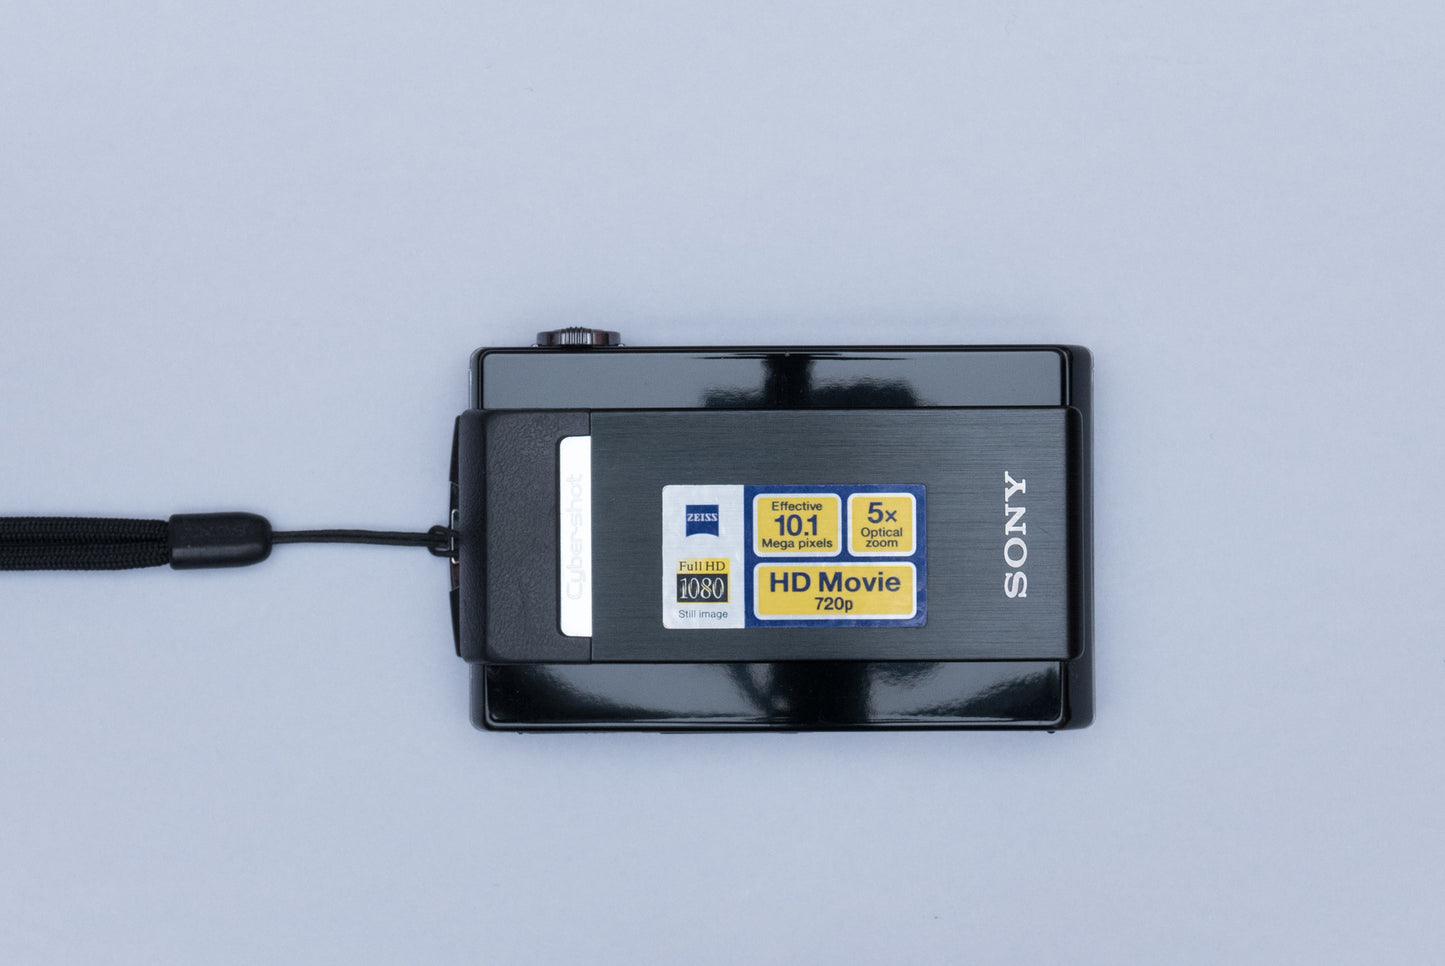 Sony Cyber-Shot DSC-T500 Compact Digital Camera